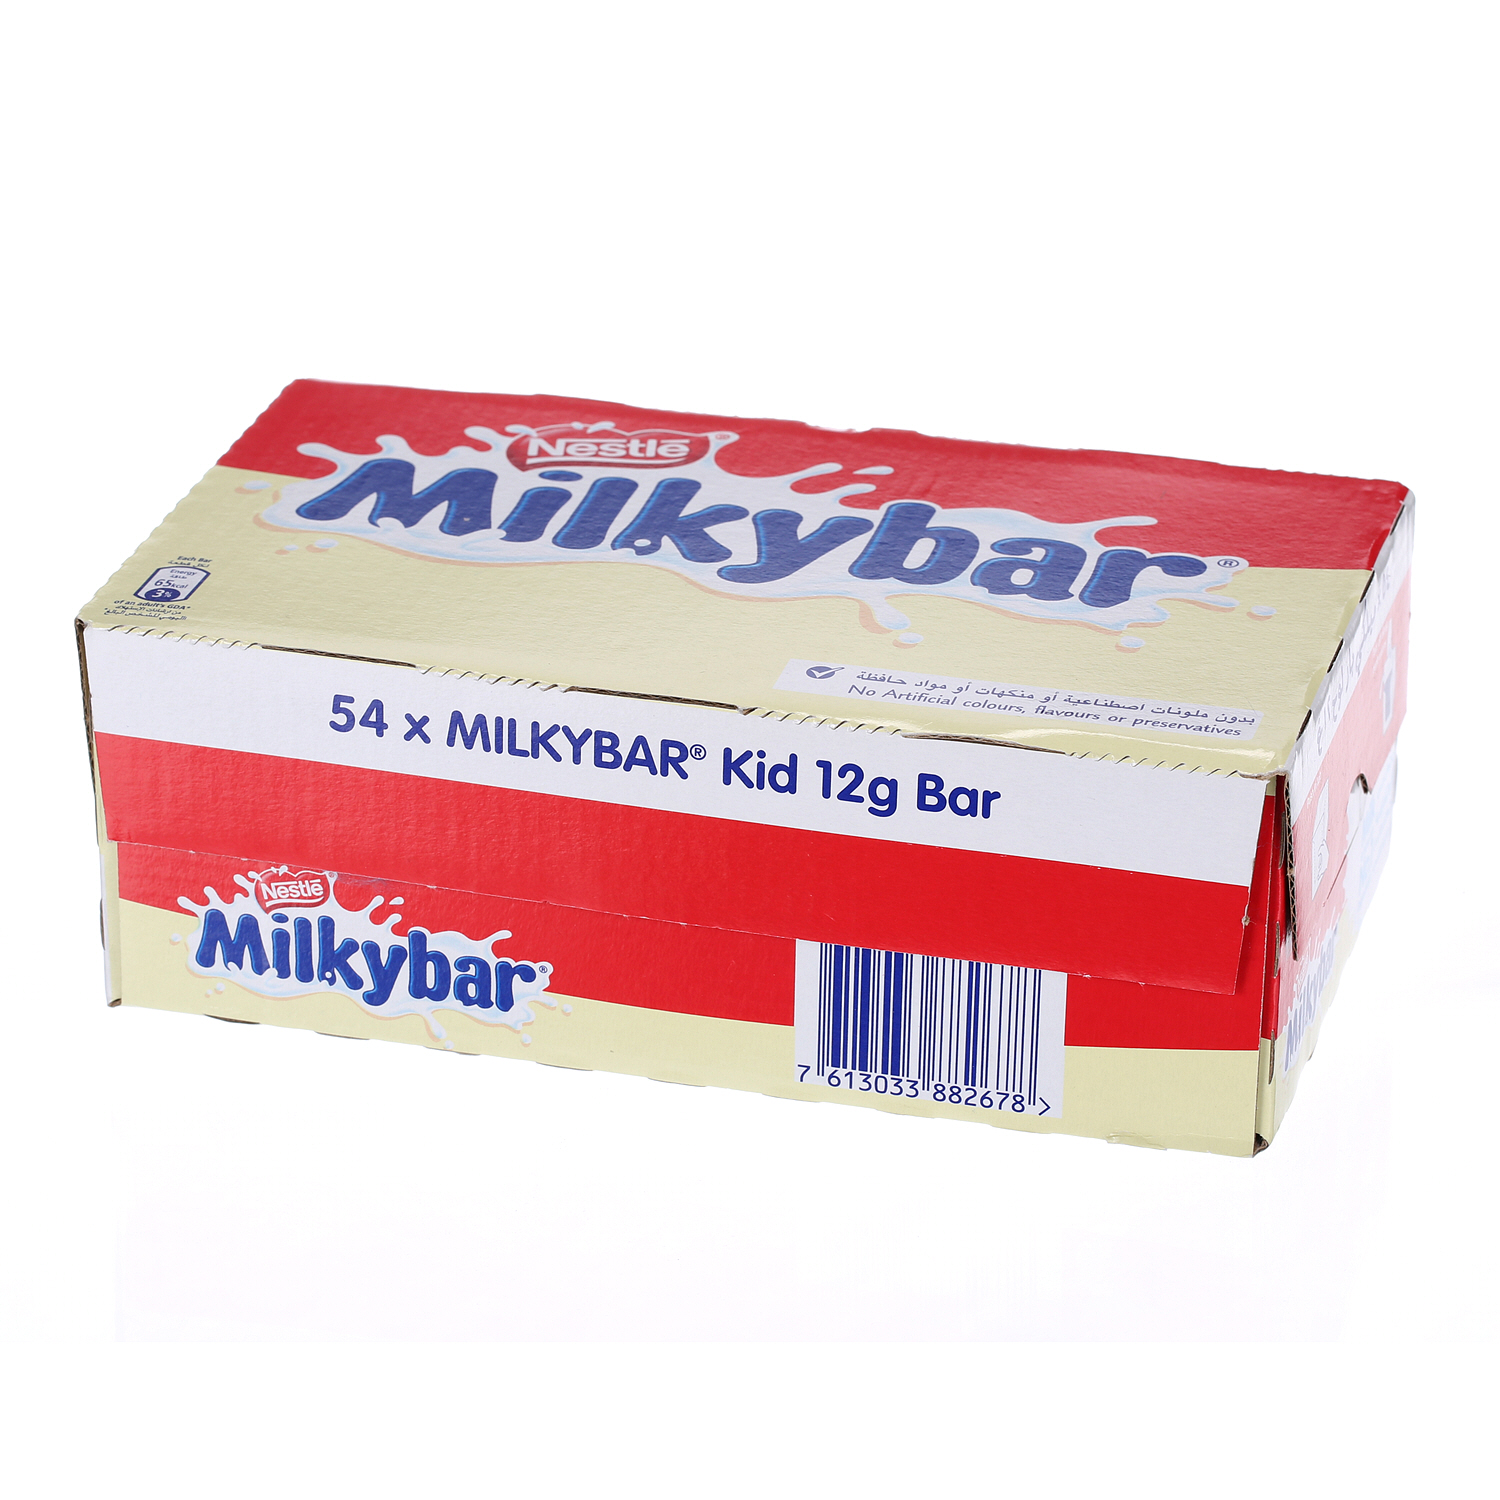 Nestlé Milky Bar Chocolate Kids 12 g × 54 Pack